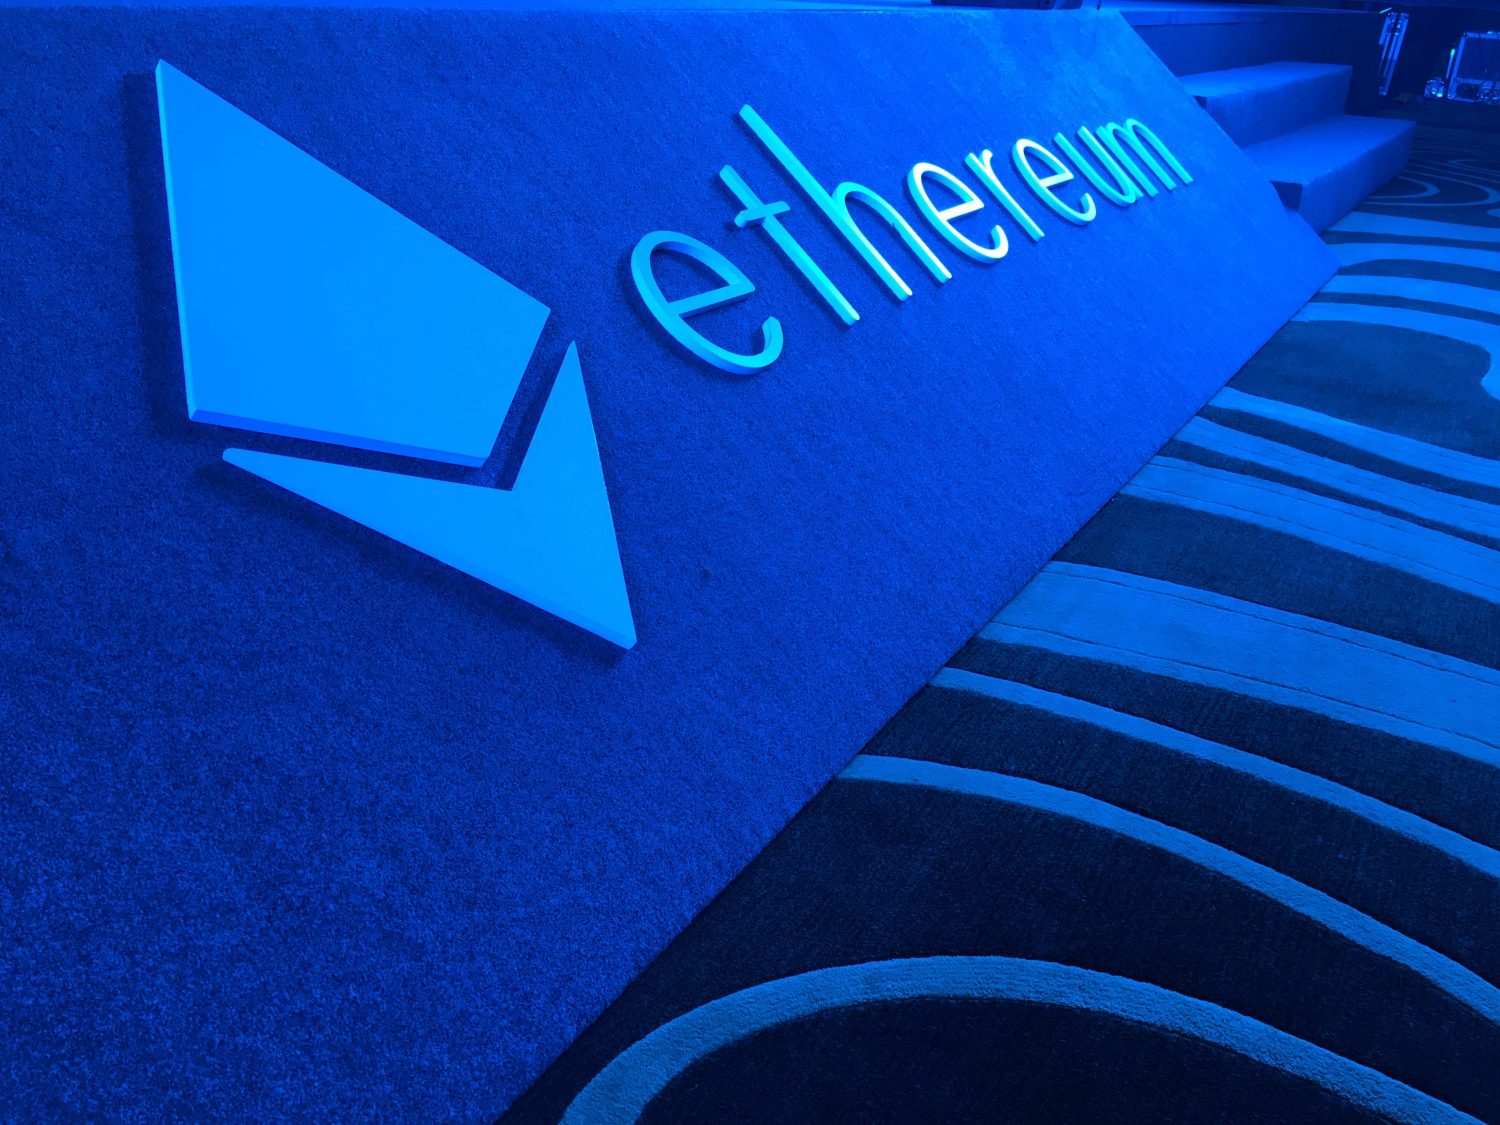 Enterprise Ethereum Alliance Launches Testing Floor for Blockchain Interoperability